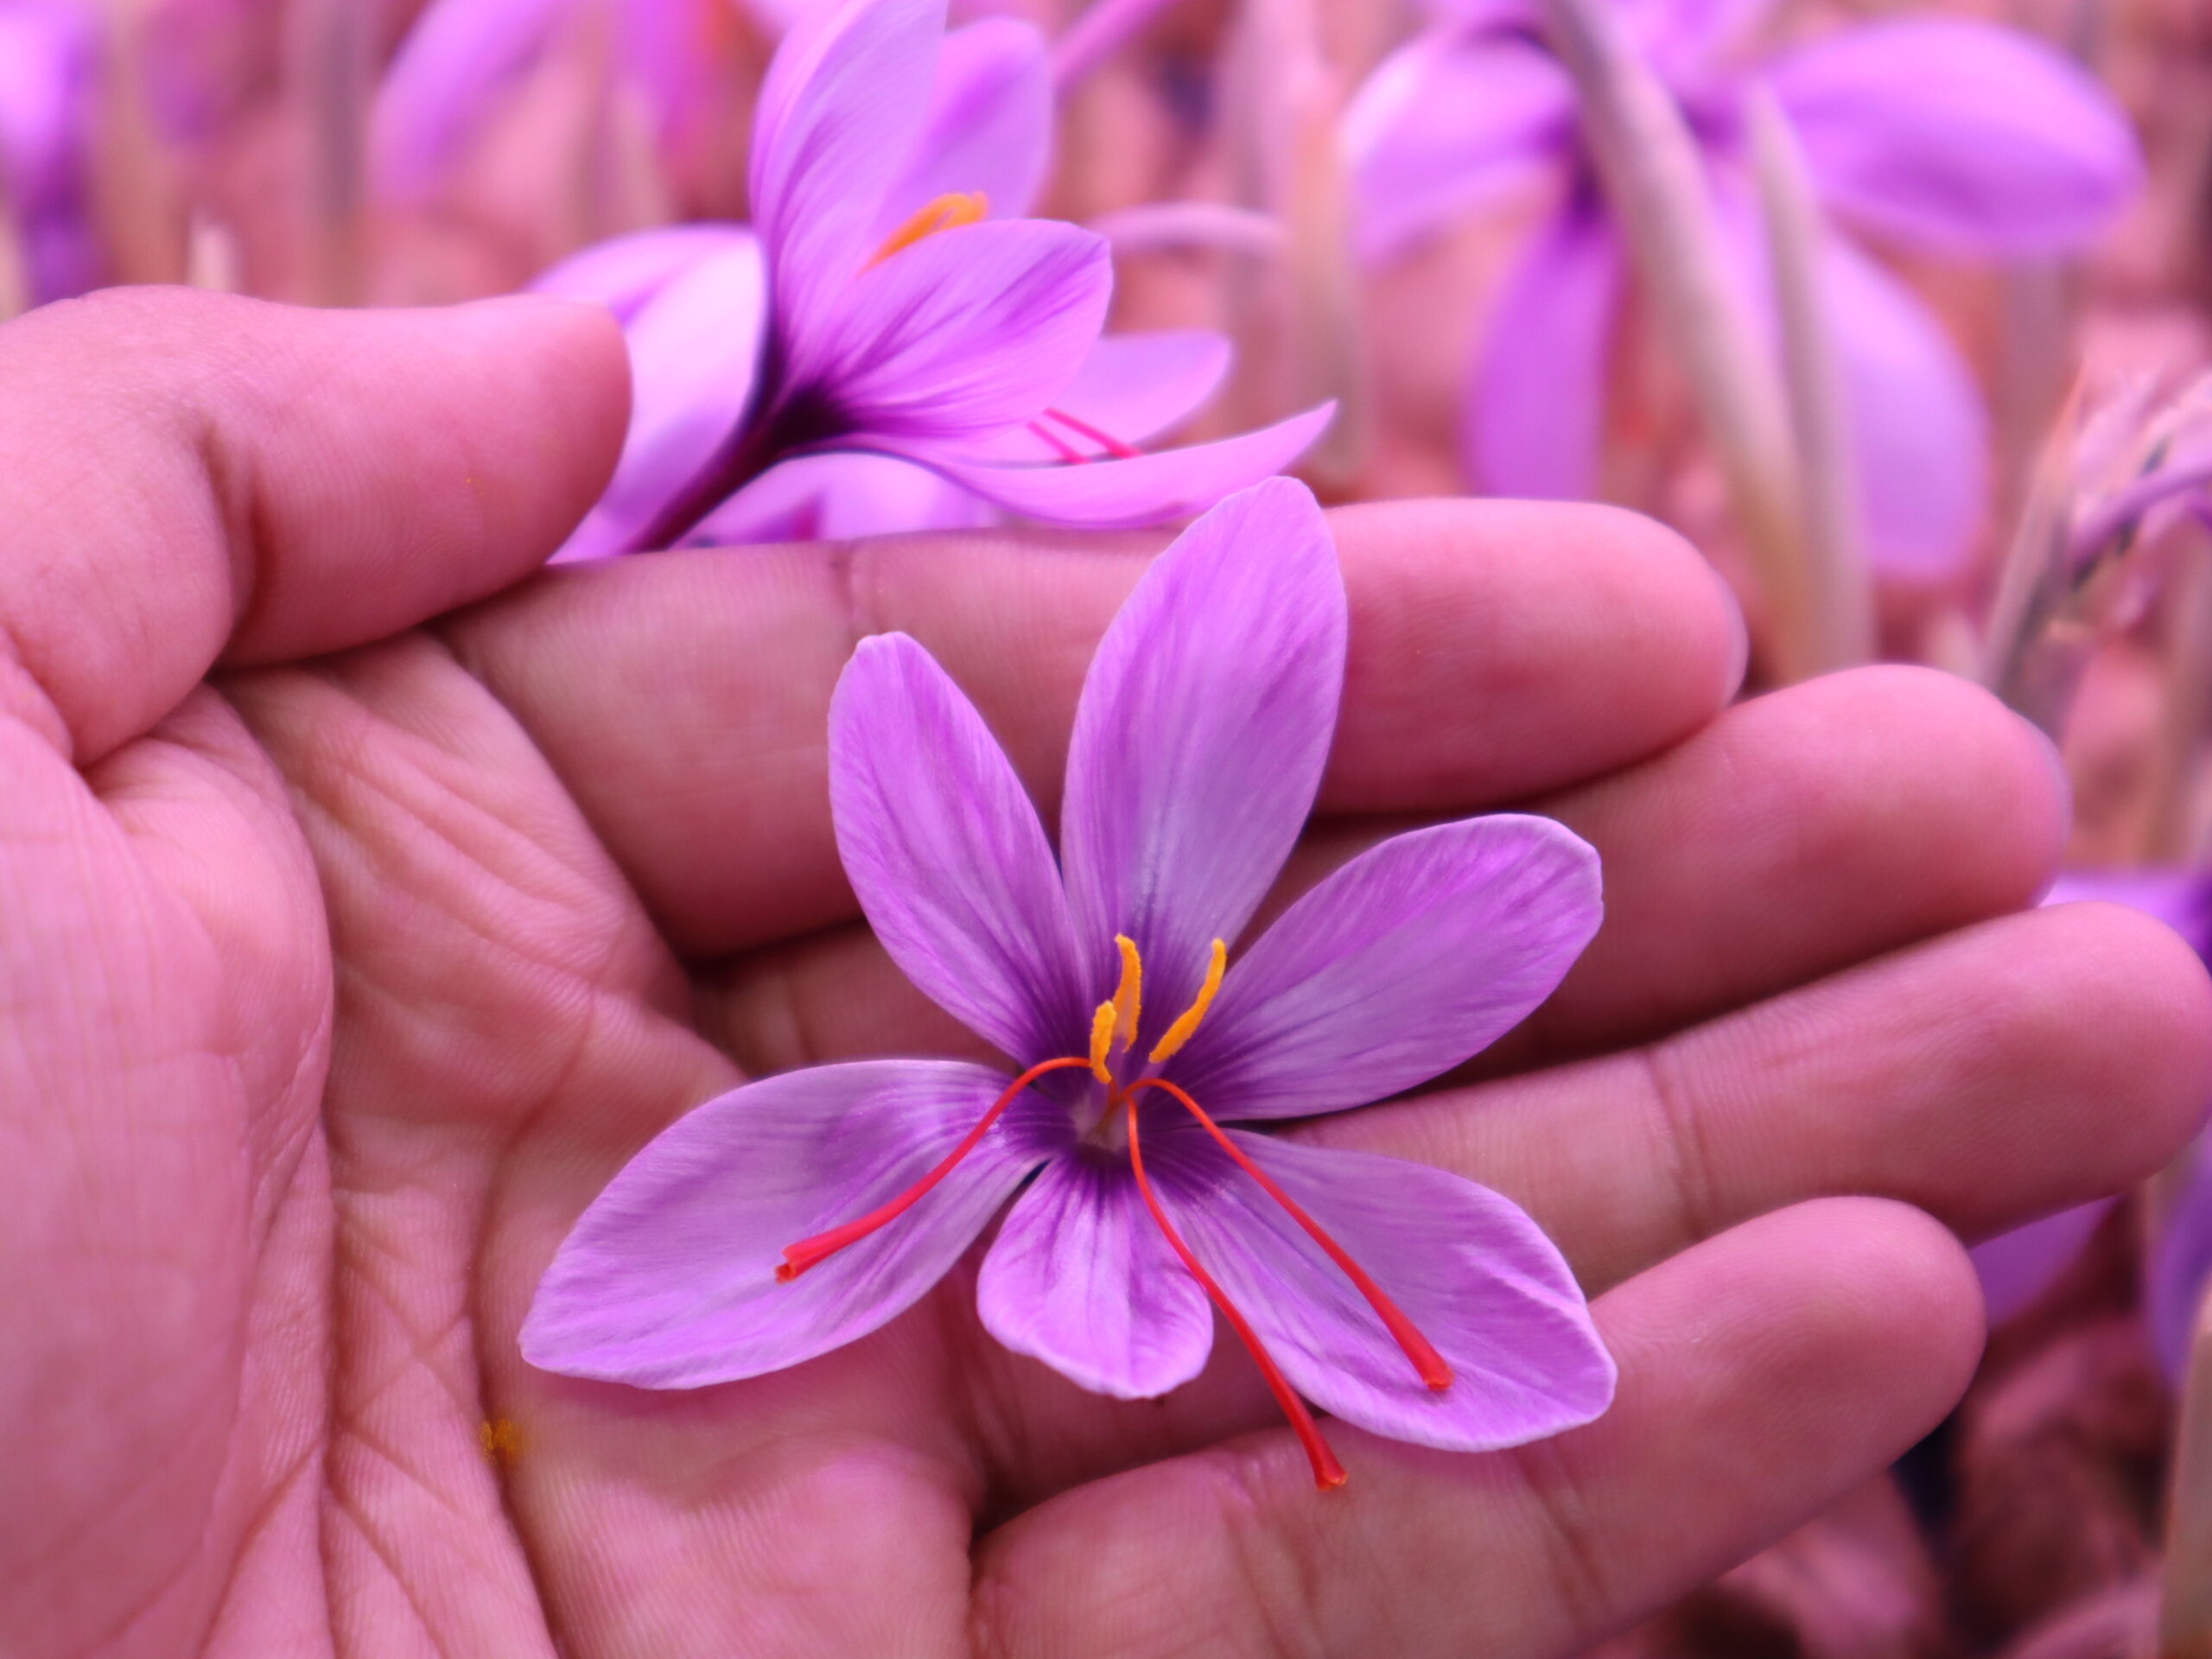 Growing Saffron Without Soil: A Beginner’s Guide to Hydroponic Saffron Farming